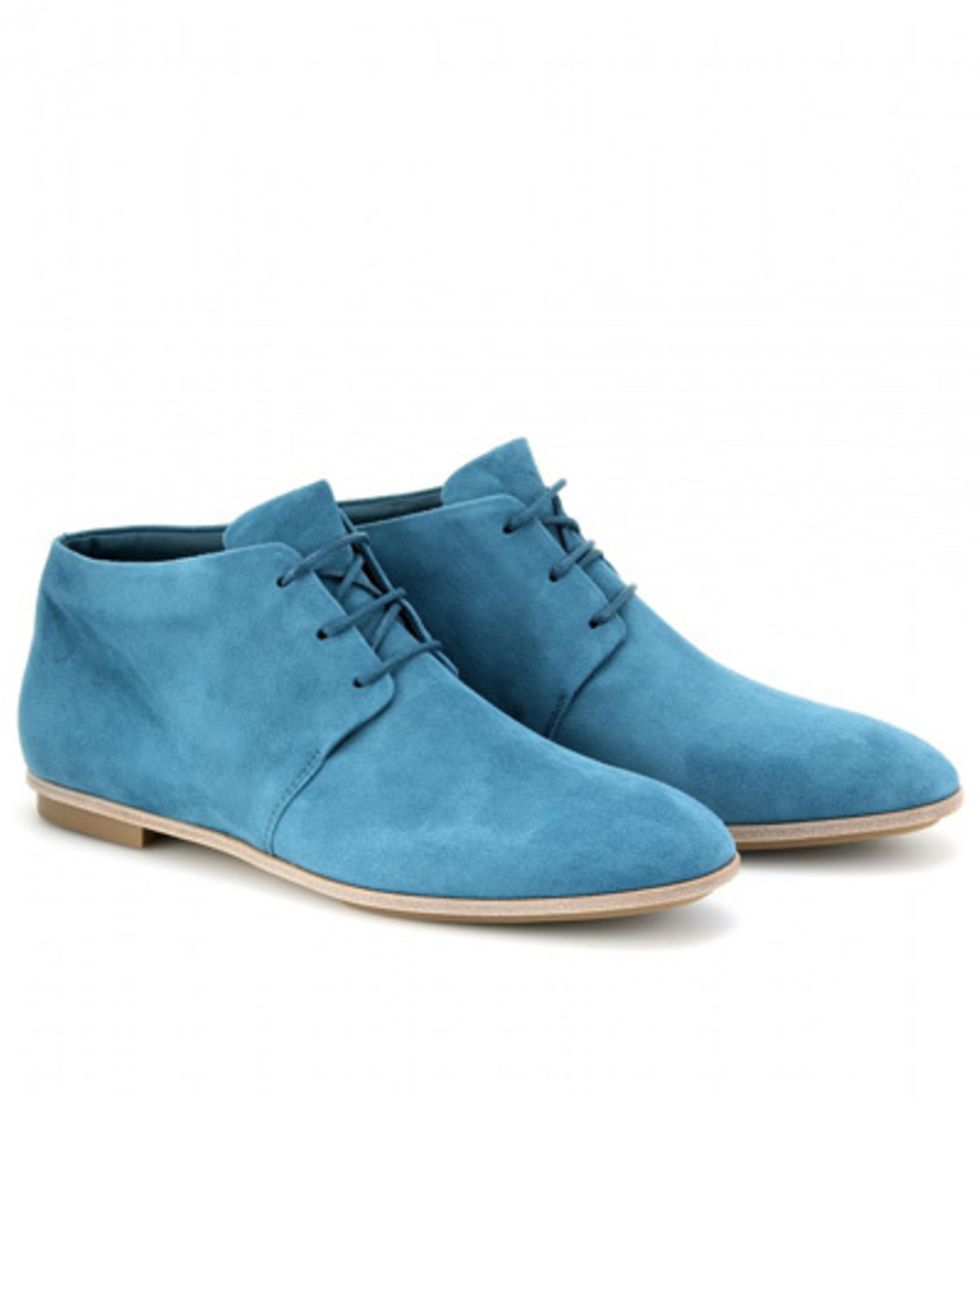 Footwear, Blue, Product, White, Teal, Aqua, Turquoise, Electric blue, Fashion, Tan, 